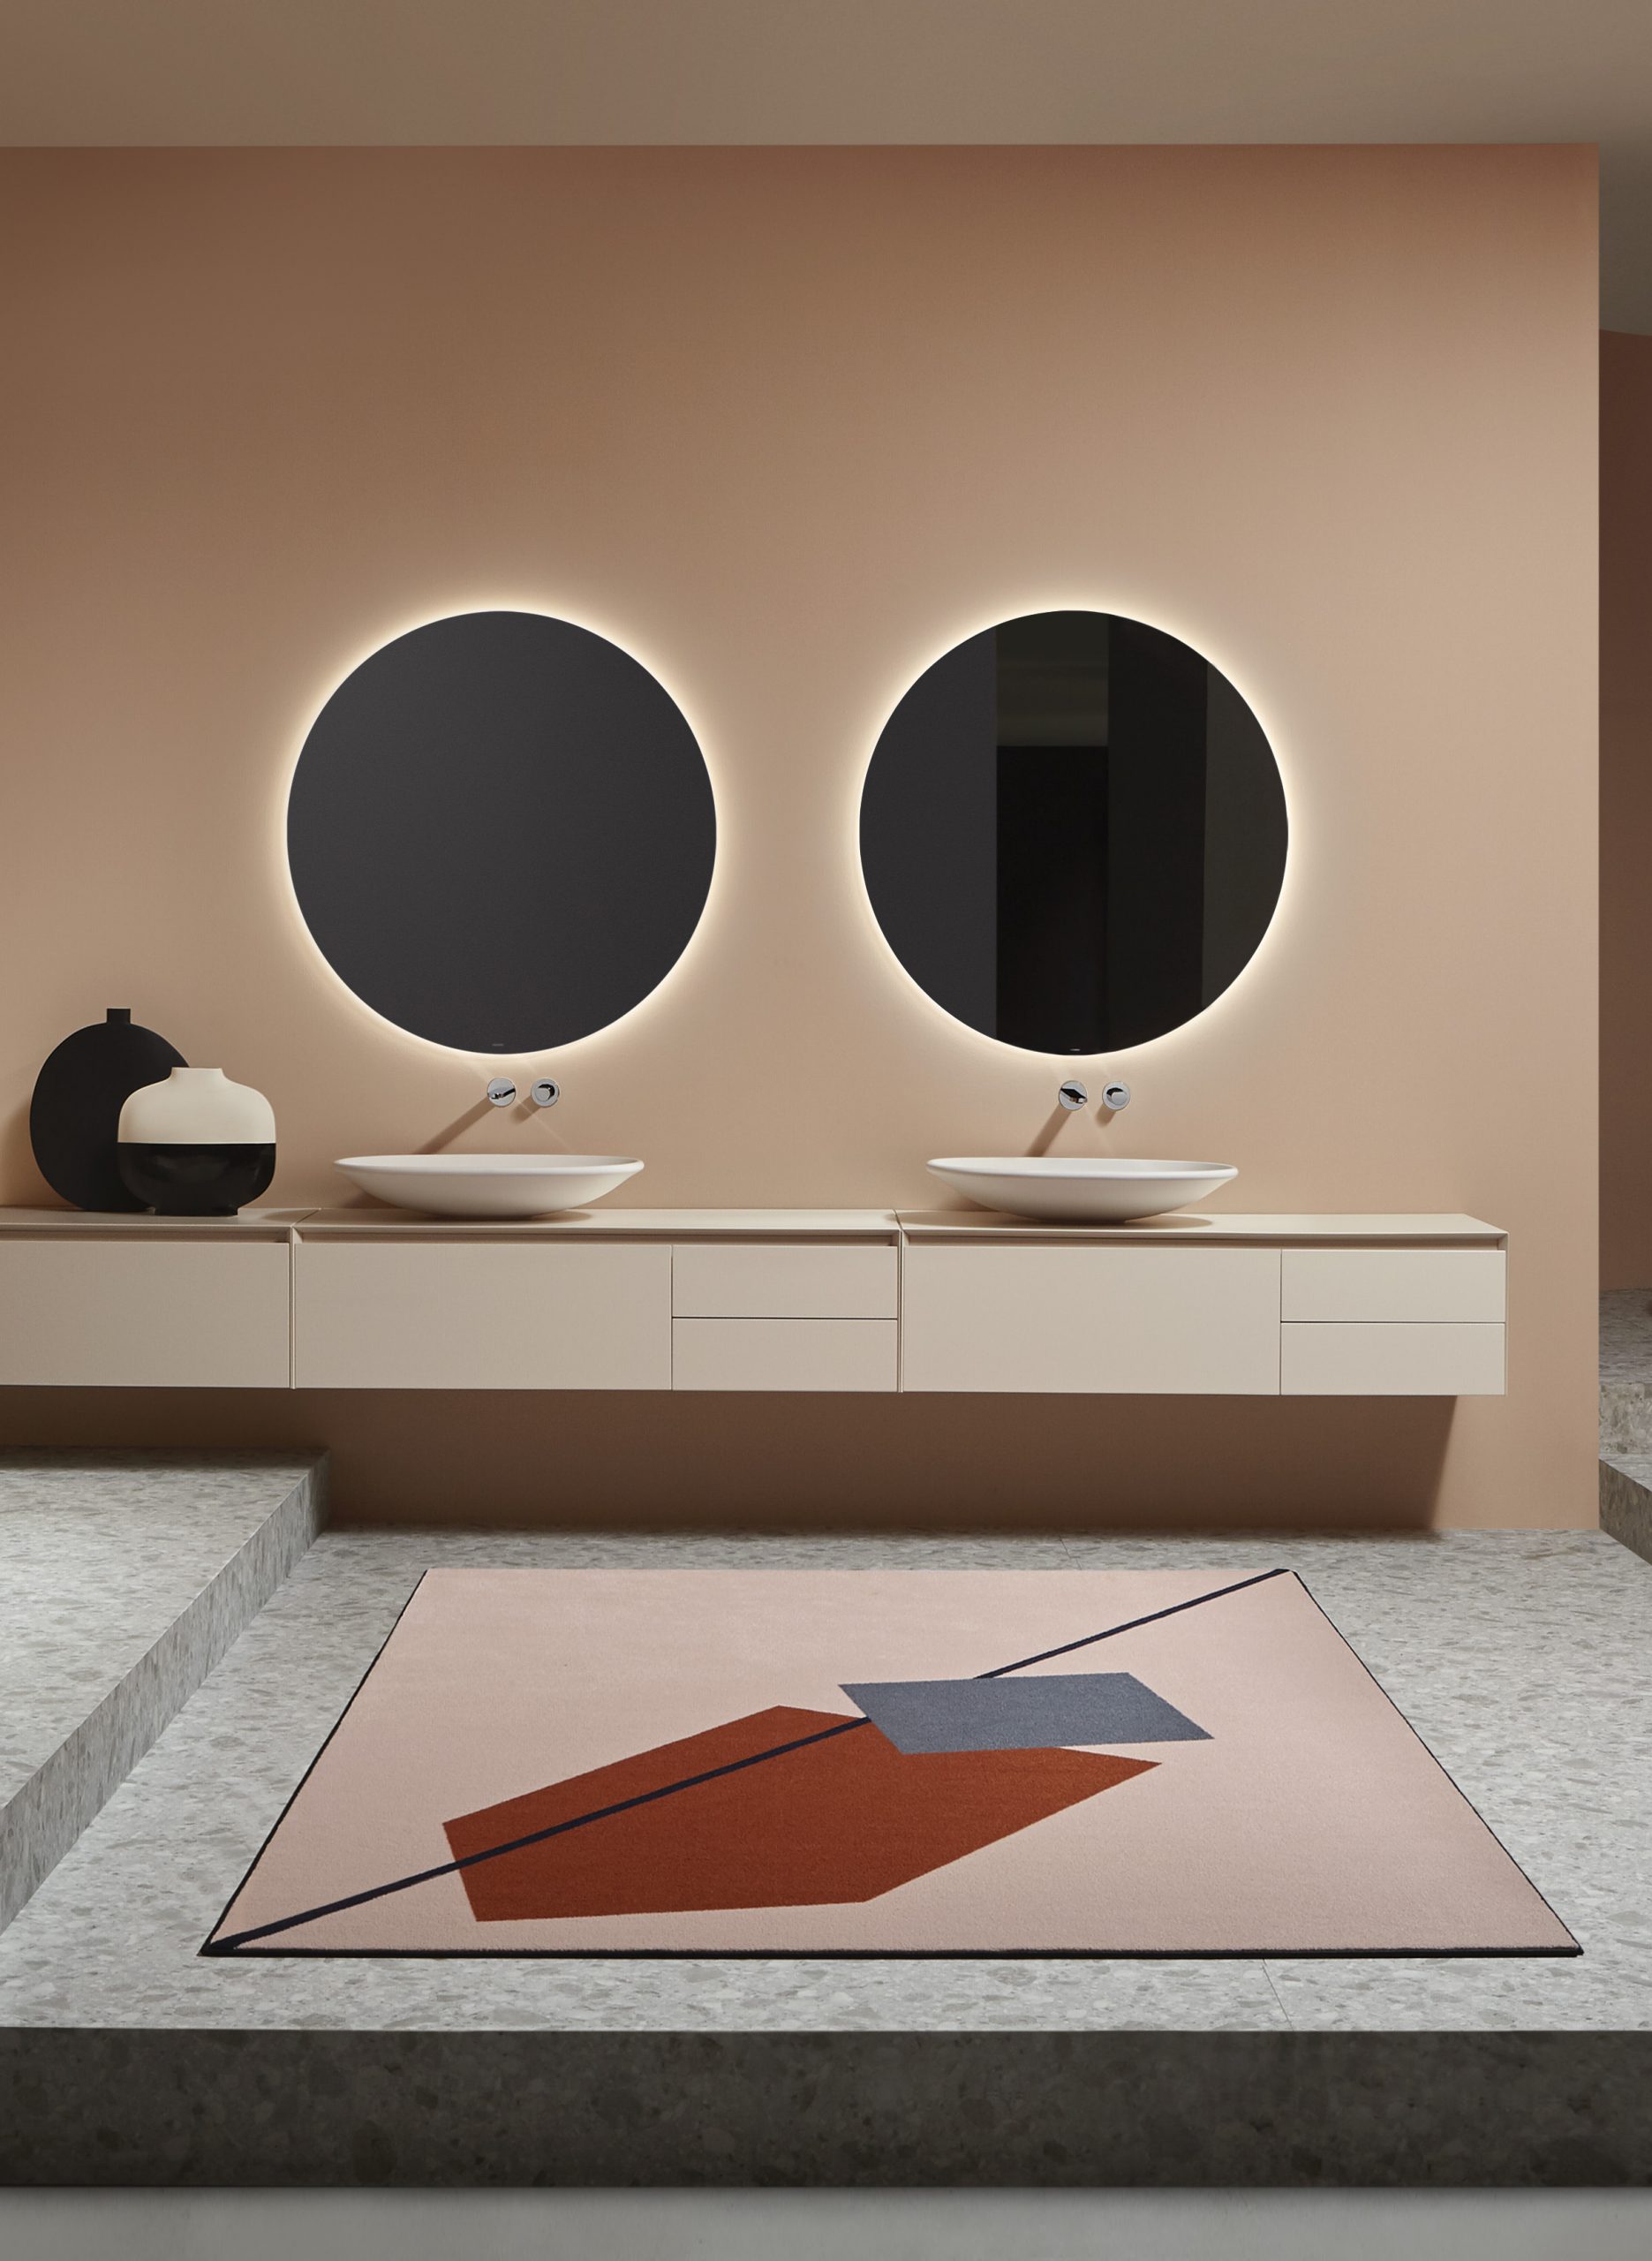 Interior with Rim washbowls by Debiasi Sandri for Antoniolupi